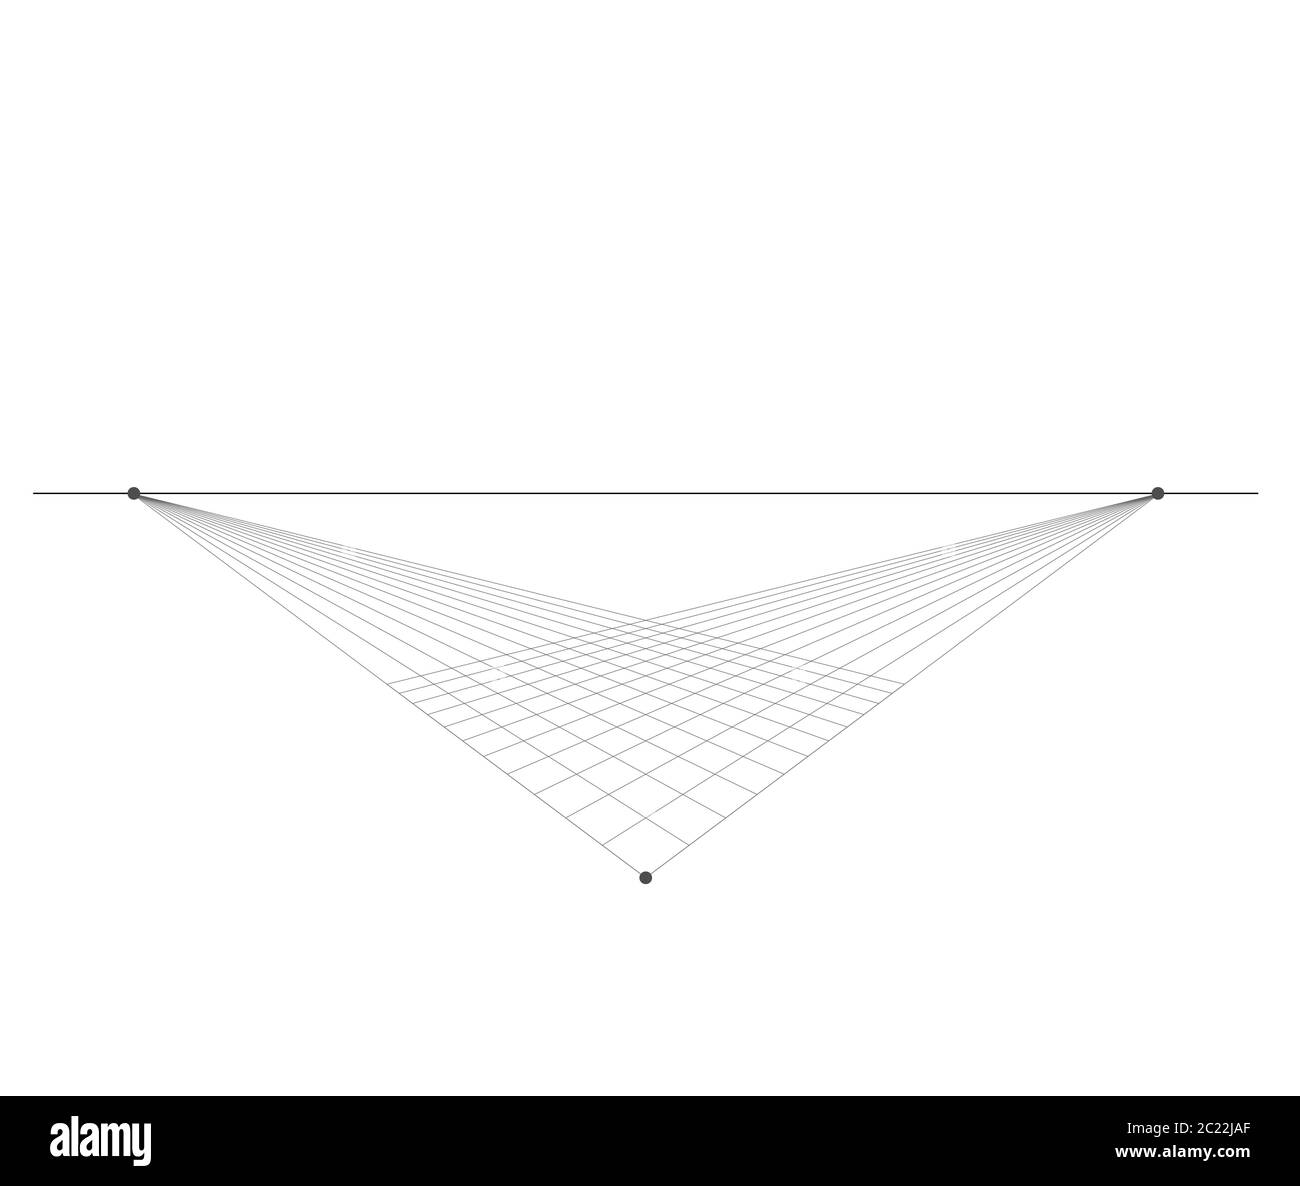 Perspective grid background 3d Vector illustration. Model projection ...